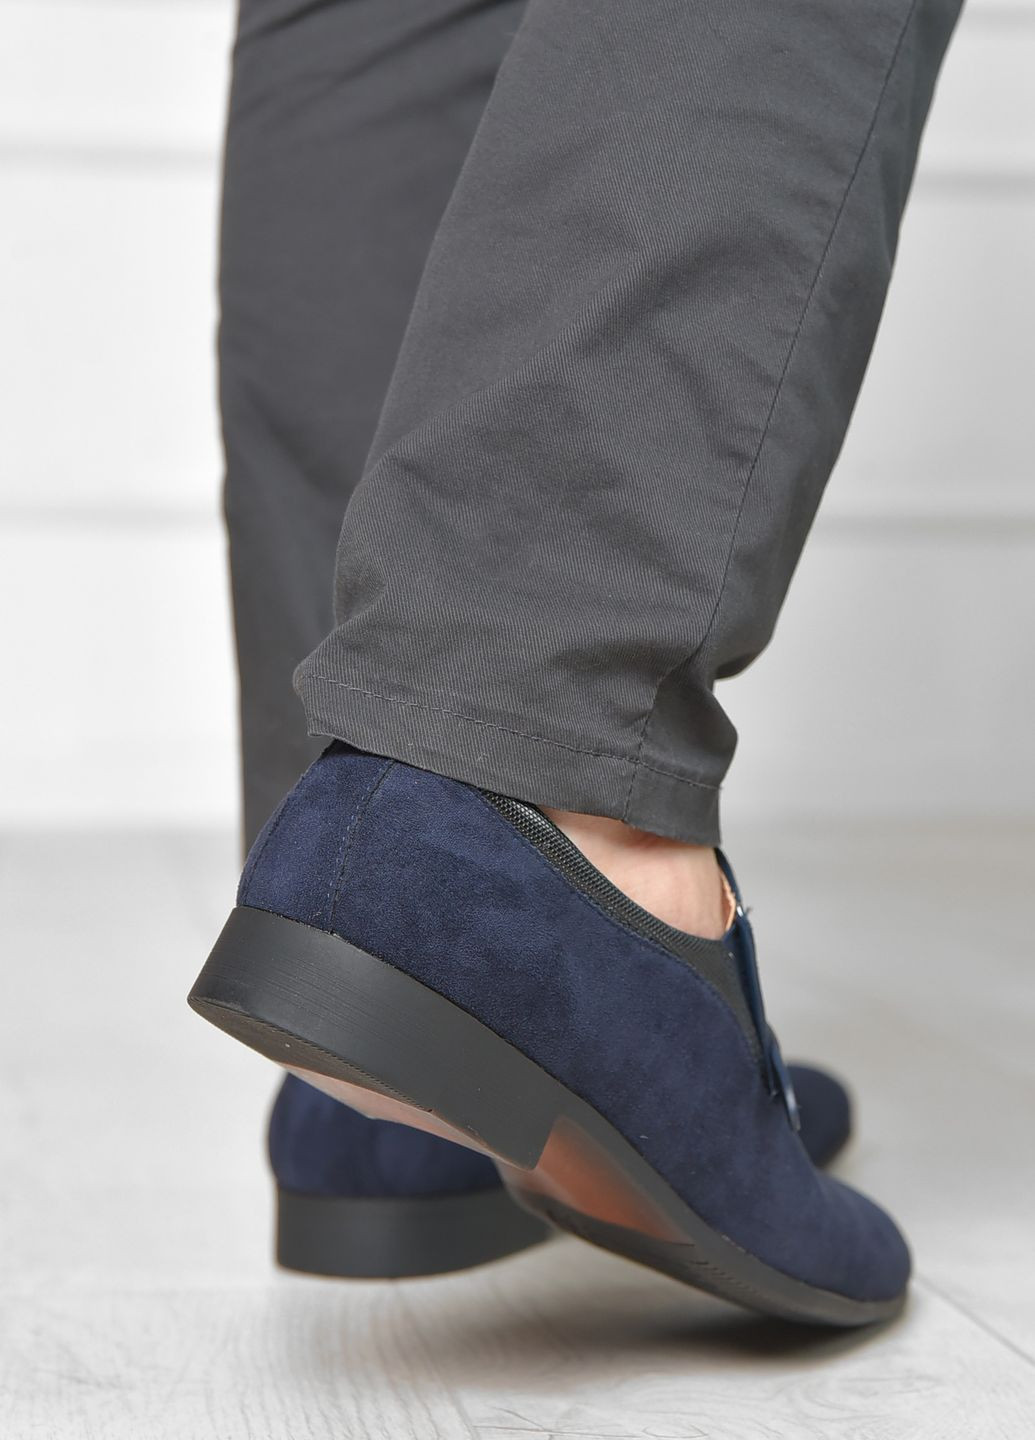 Темно-синие классические туфли мужские темно-синего цвета Let's Shop без шнурков